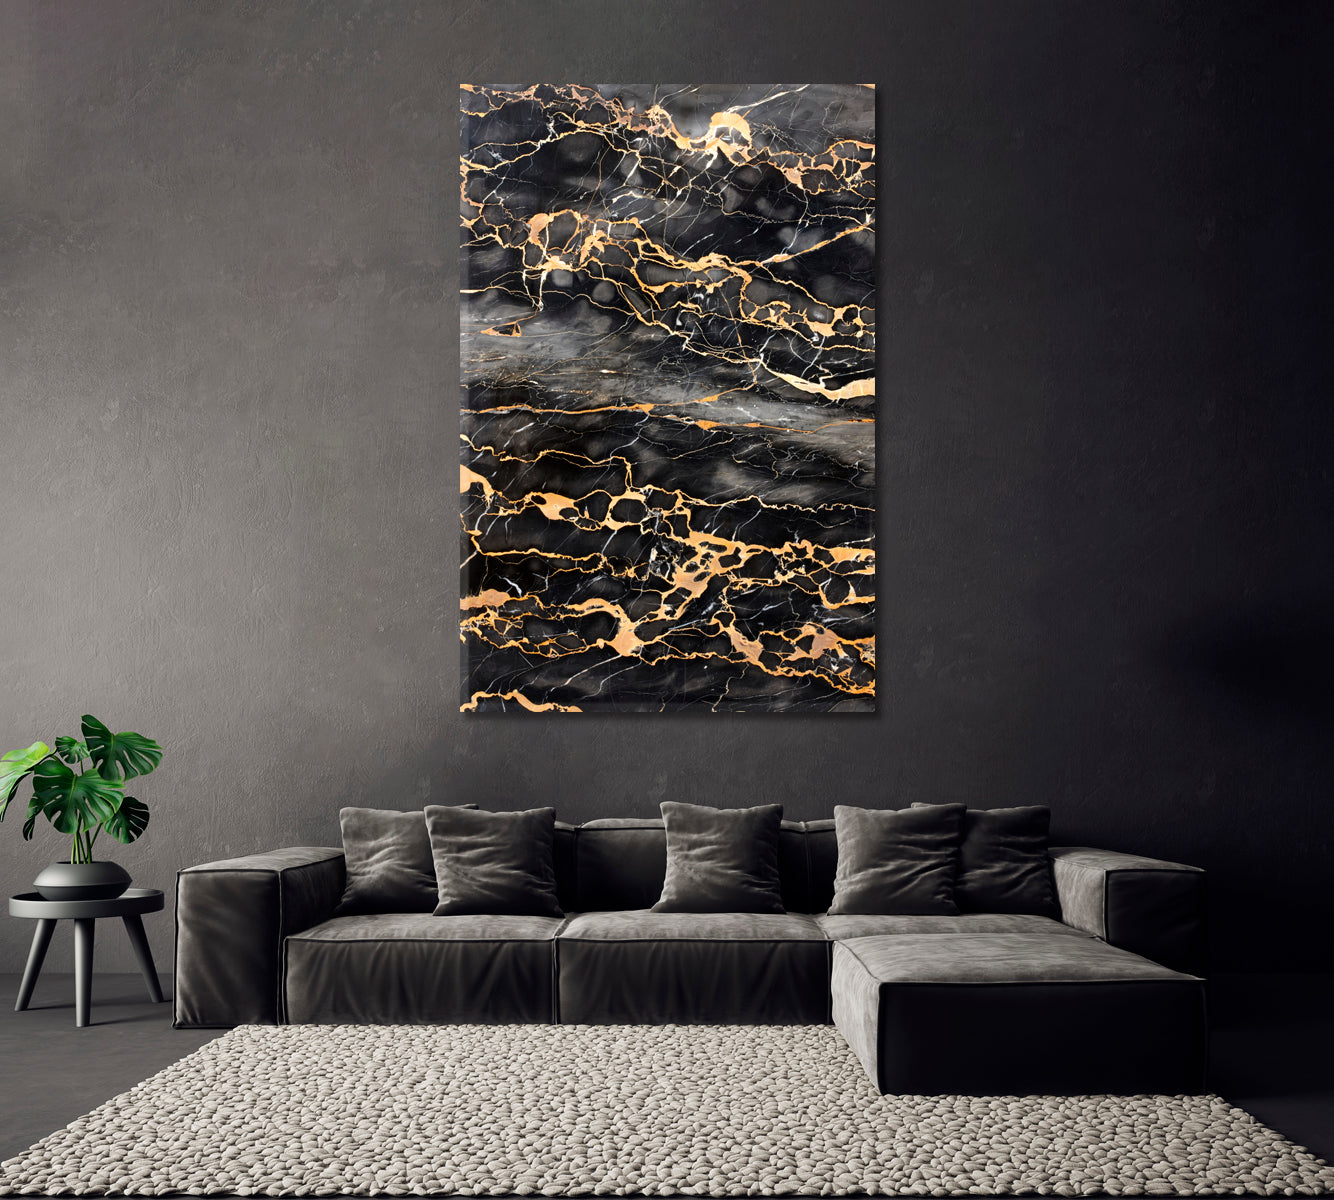 Black Marble with Golden Veins Canvas Print ArtLexy   